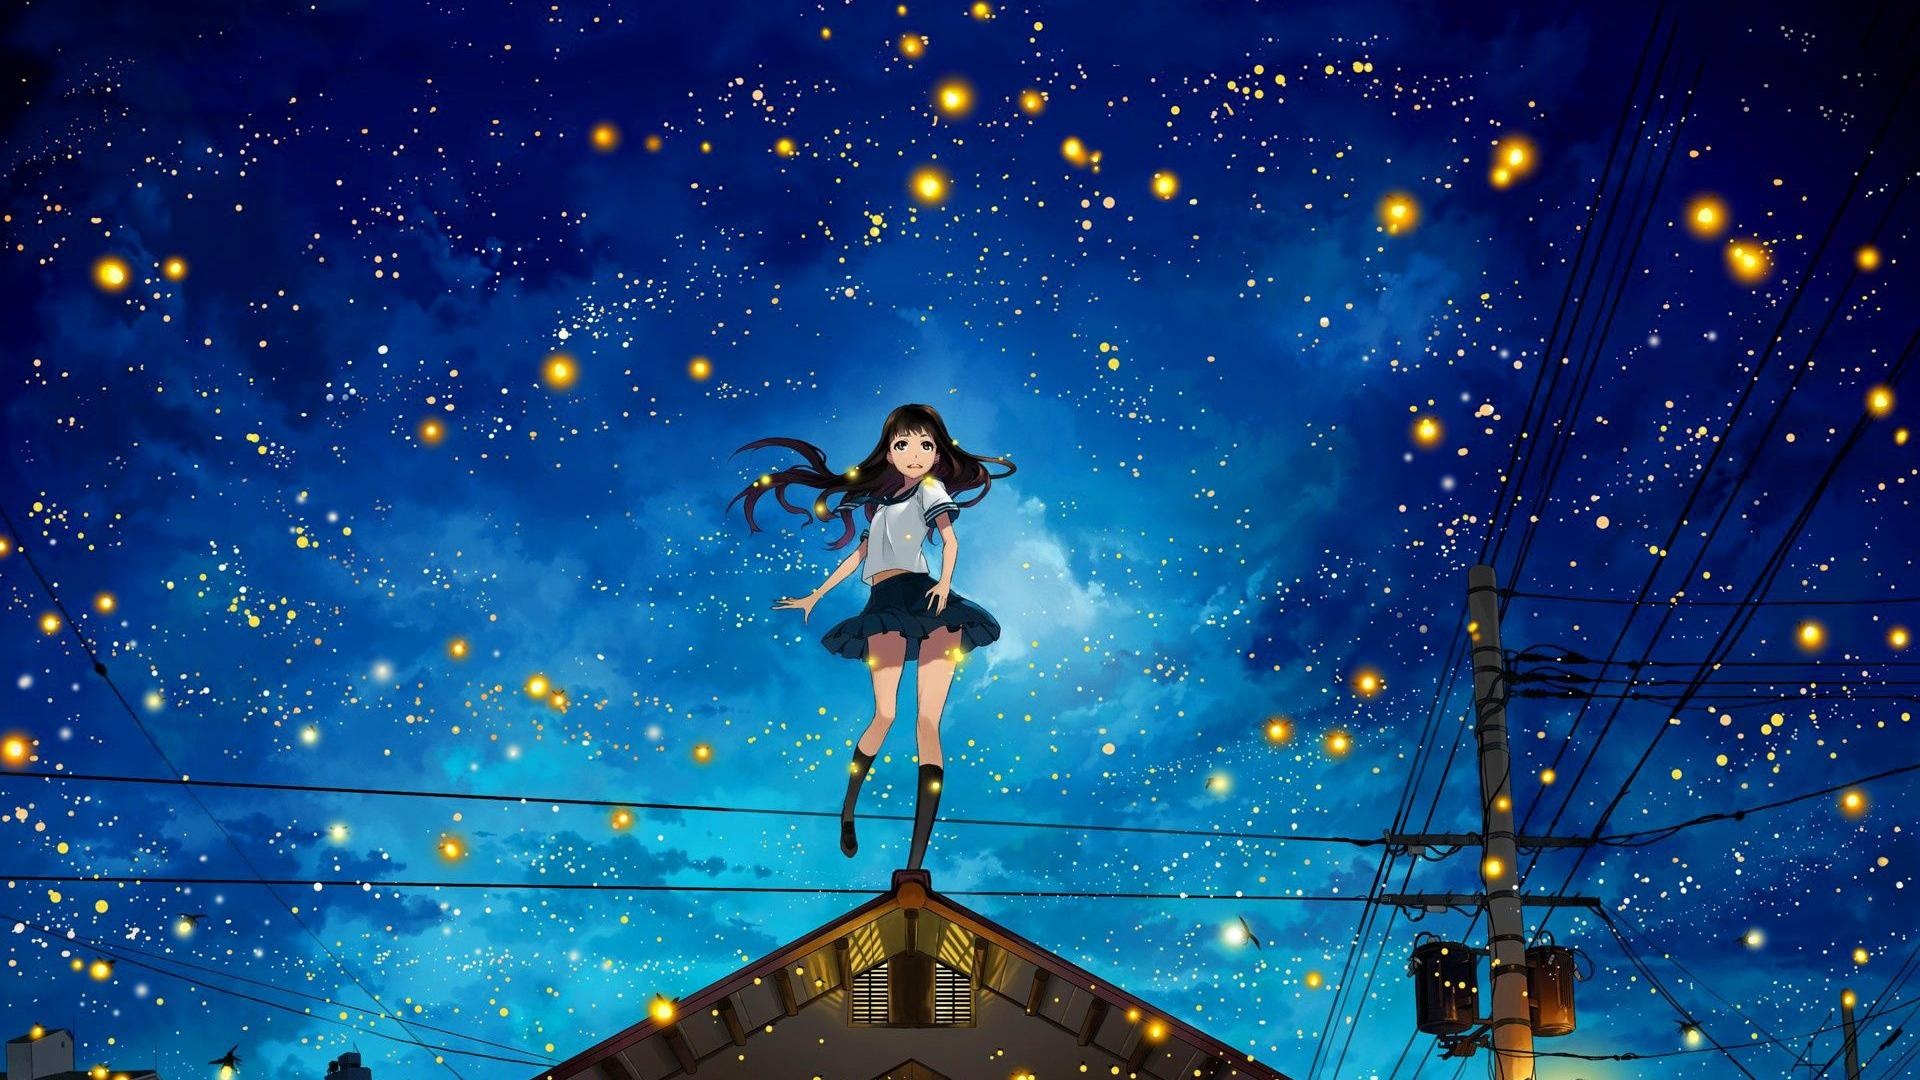 Wallpaper : night, anime girls, sky, snow, winter, atmosphere, universe ...